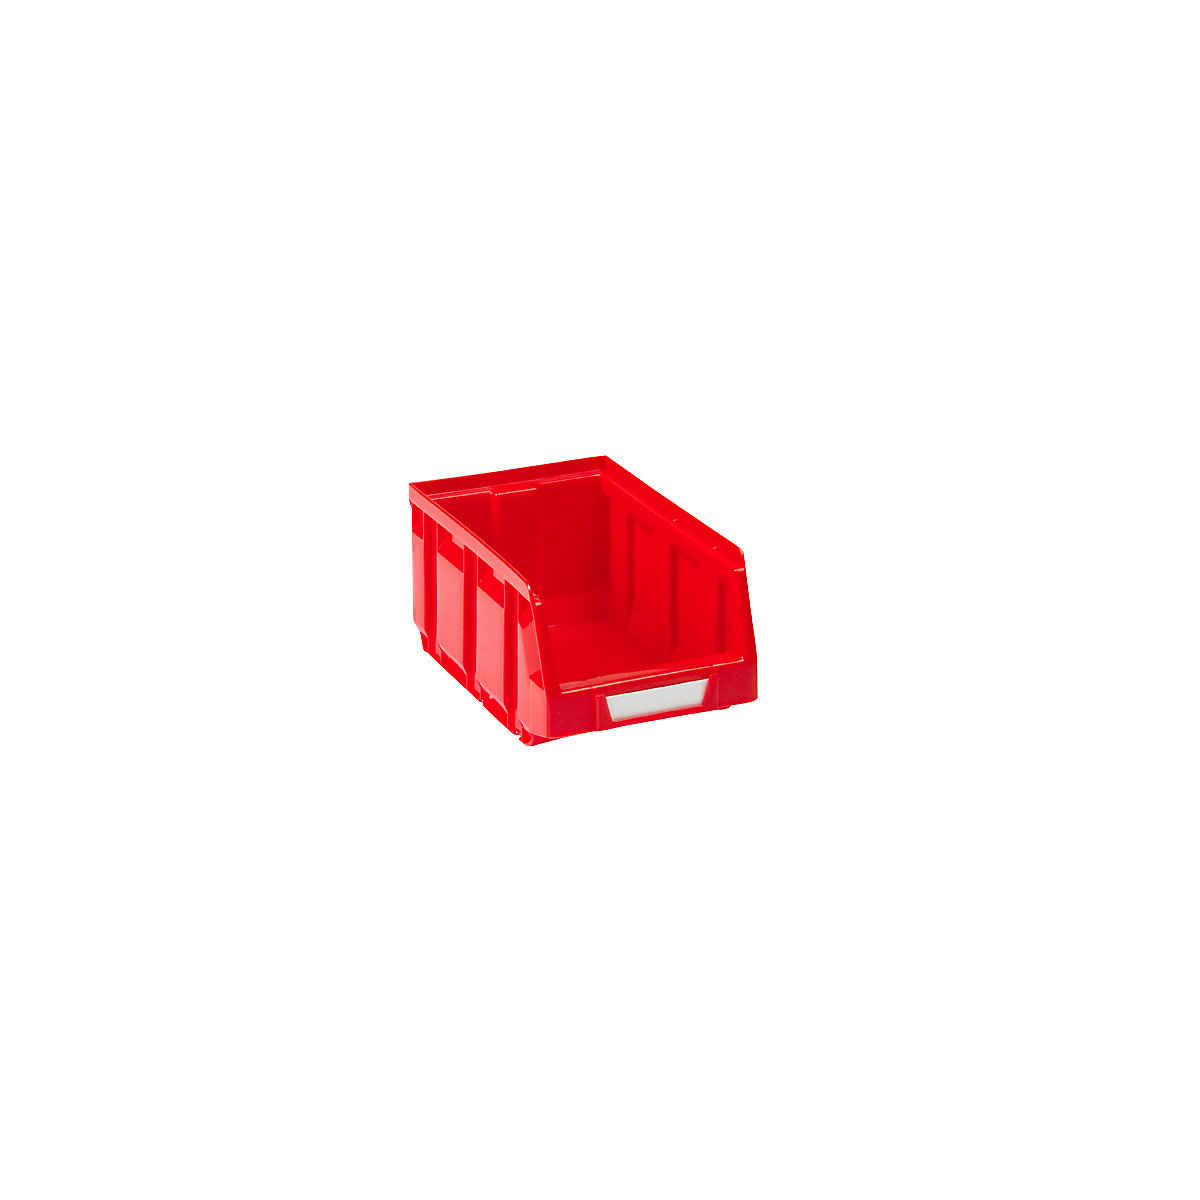 Magazijnbak van polyethyleen, l x b x h = 167 x 105 x 82 mm, rood, VE = 48 stuks-9